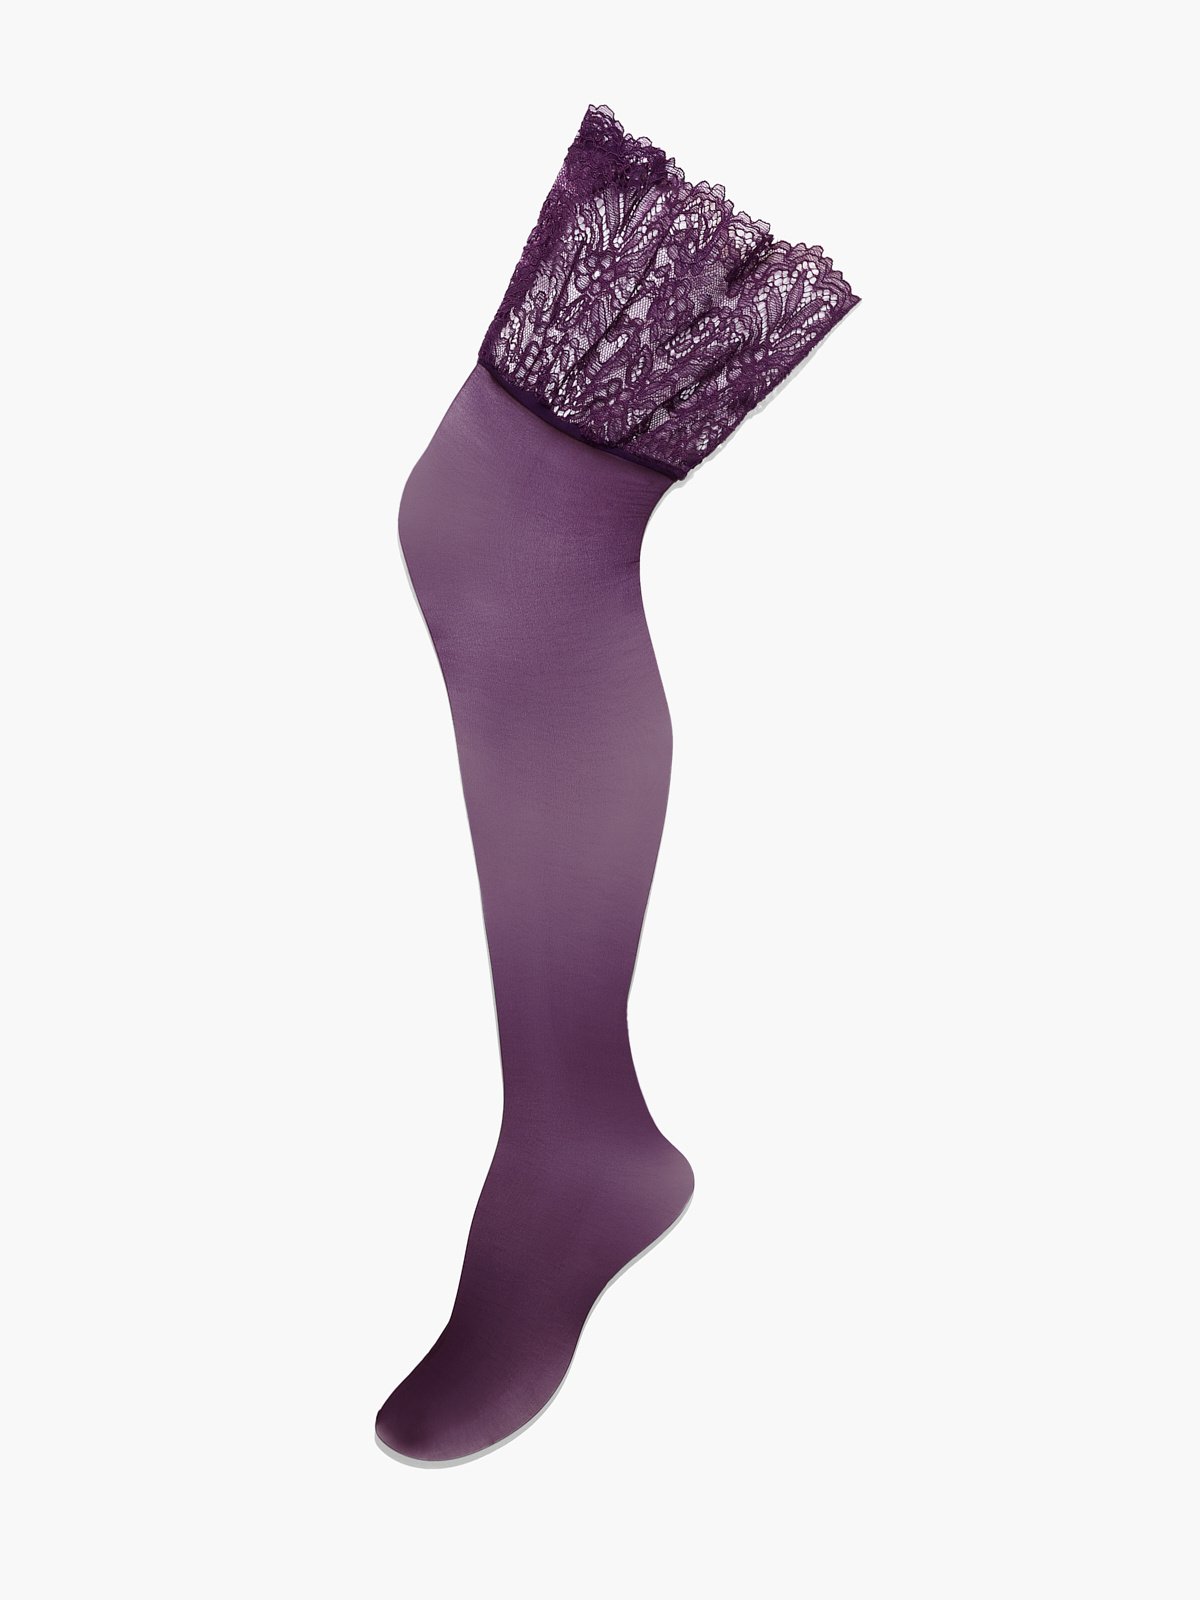 Shop for Purple, Tights & Socks, Lingerie